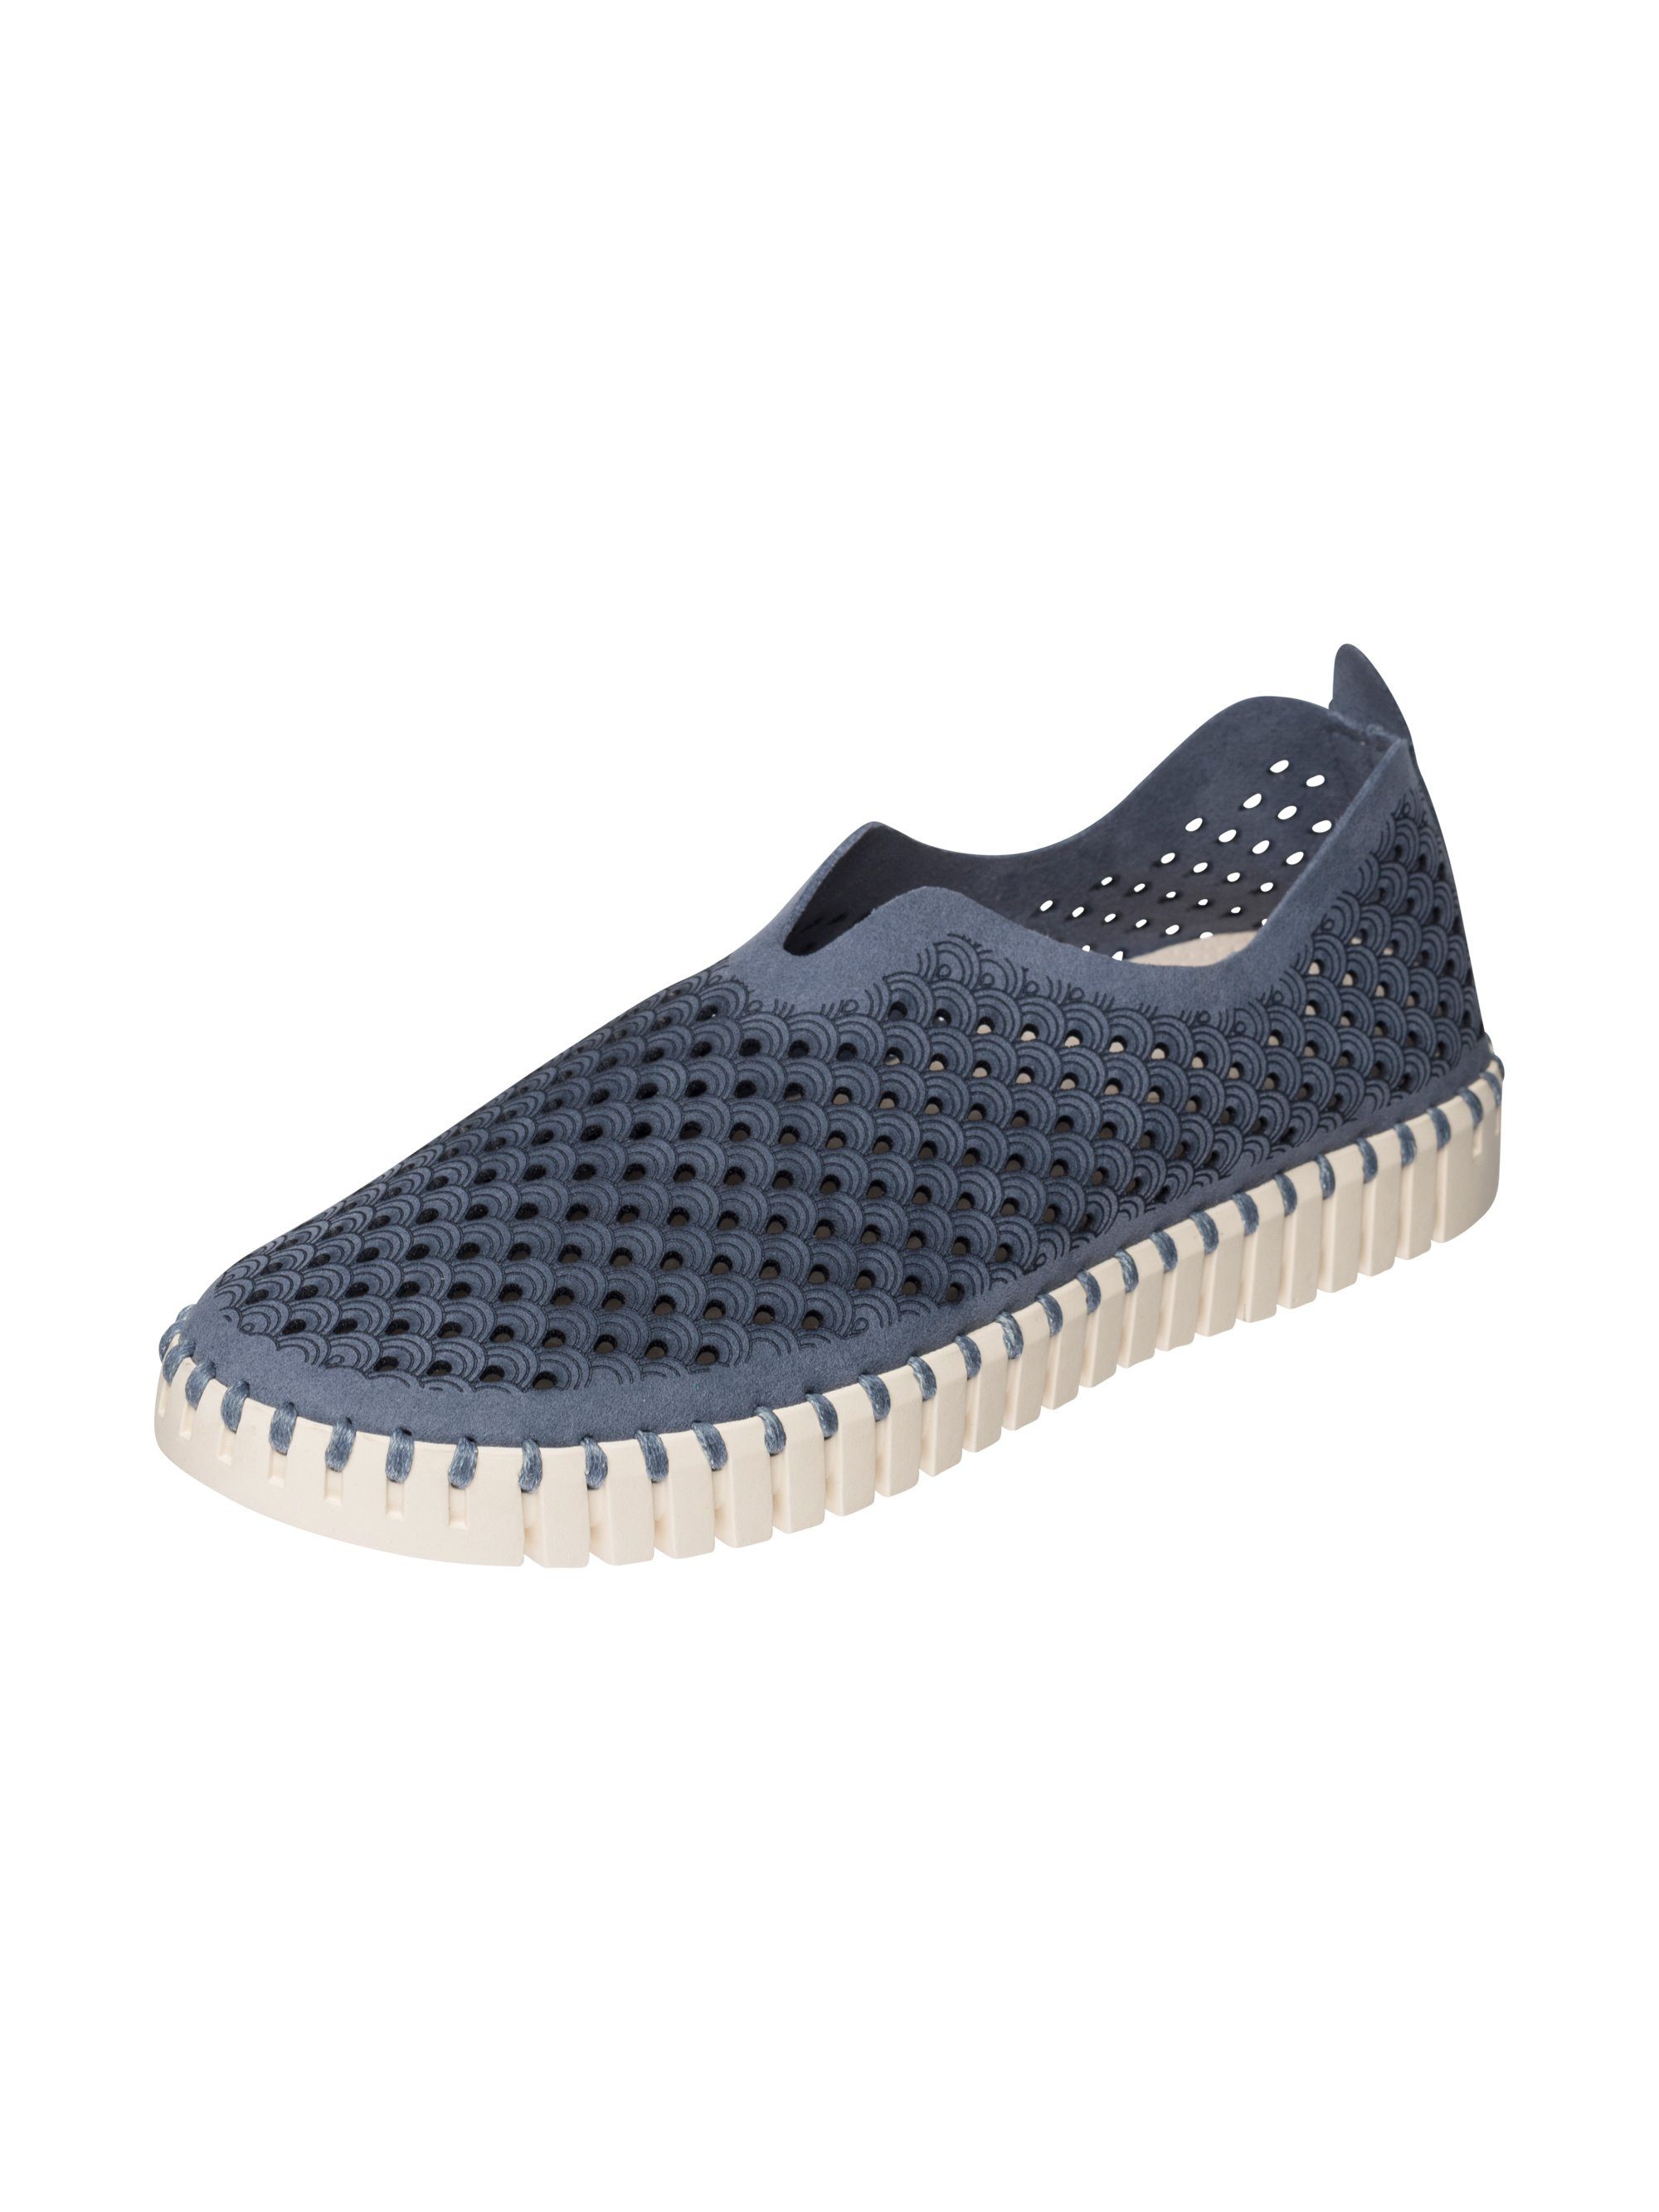 Ilse Jacobsen TULIP3275 Sneaker Praktisch, bequem, flexible Laufsohle, ohne Klebstoff Grey Blue